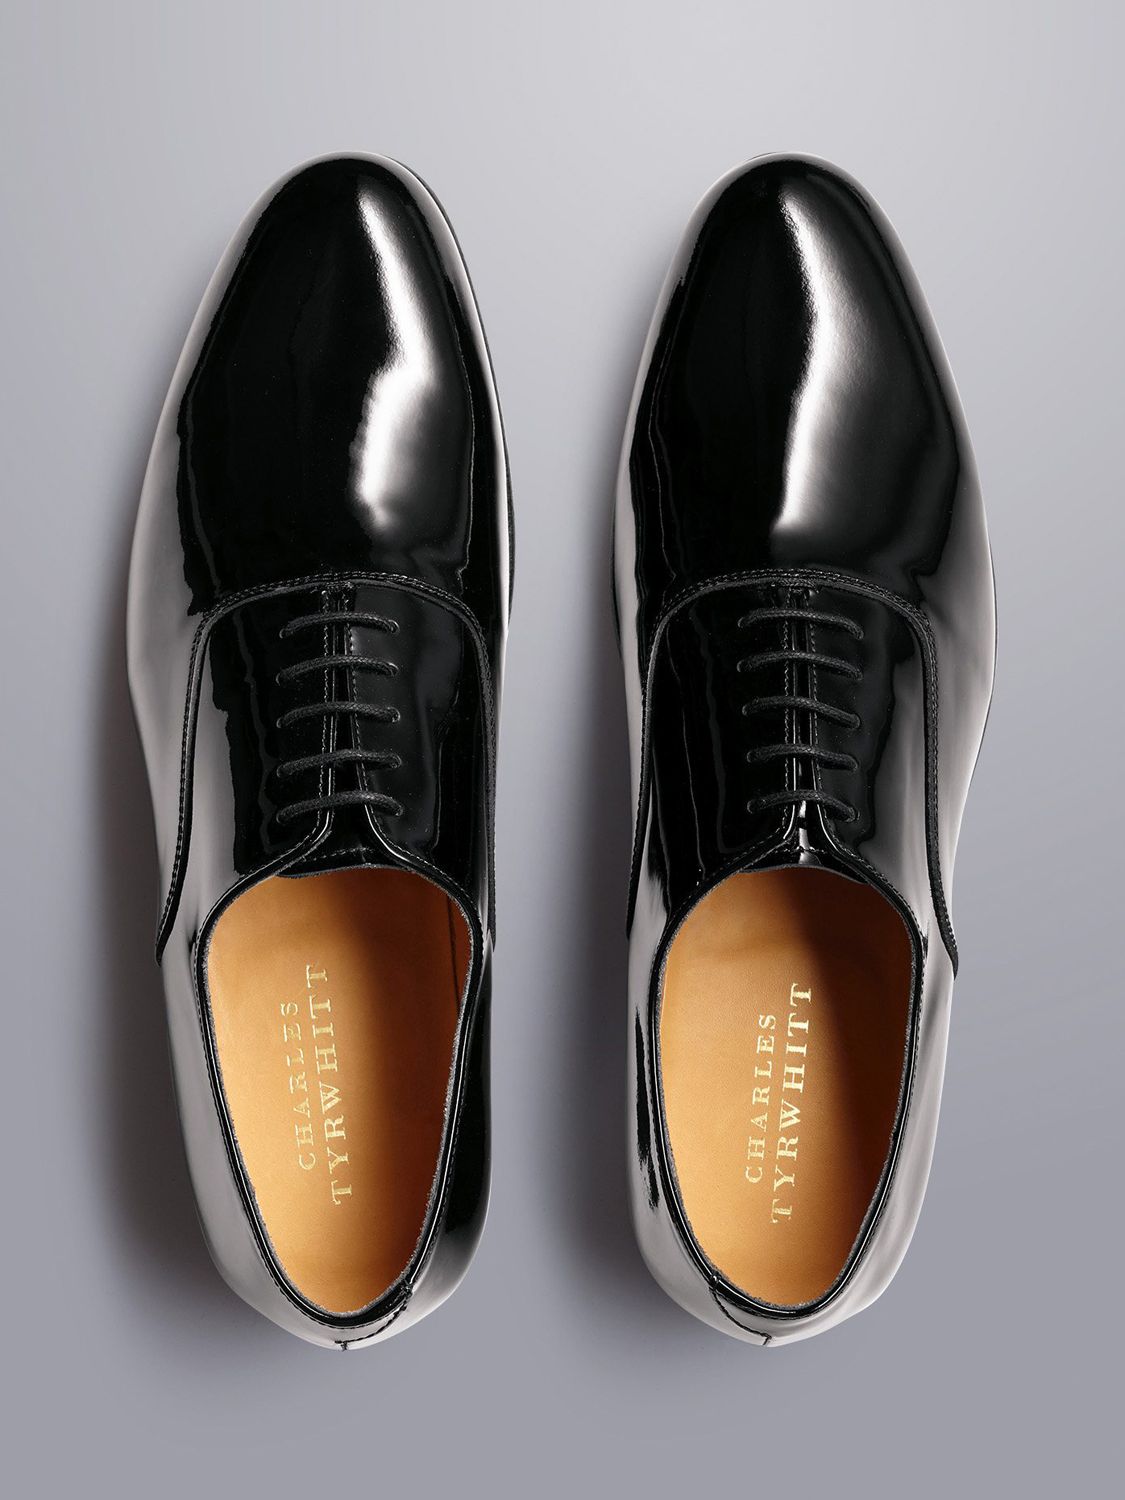 Charles Tyrwhitt Patent Oxford Shoes, Black, 10